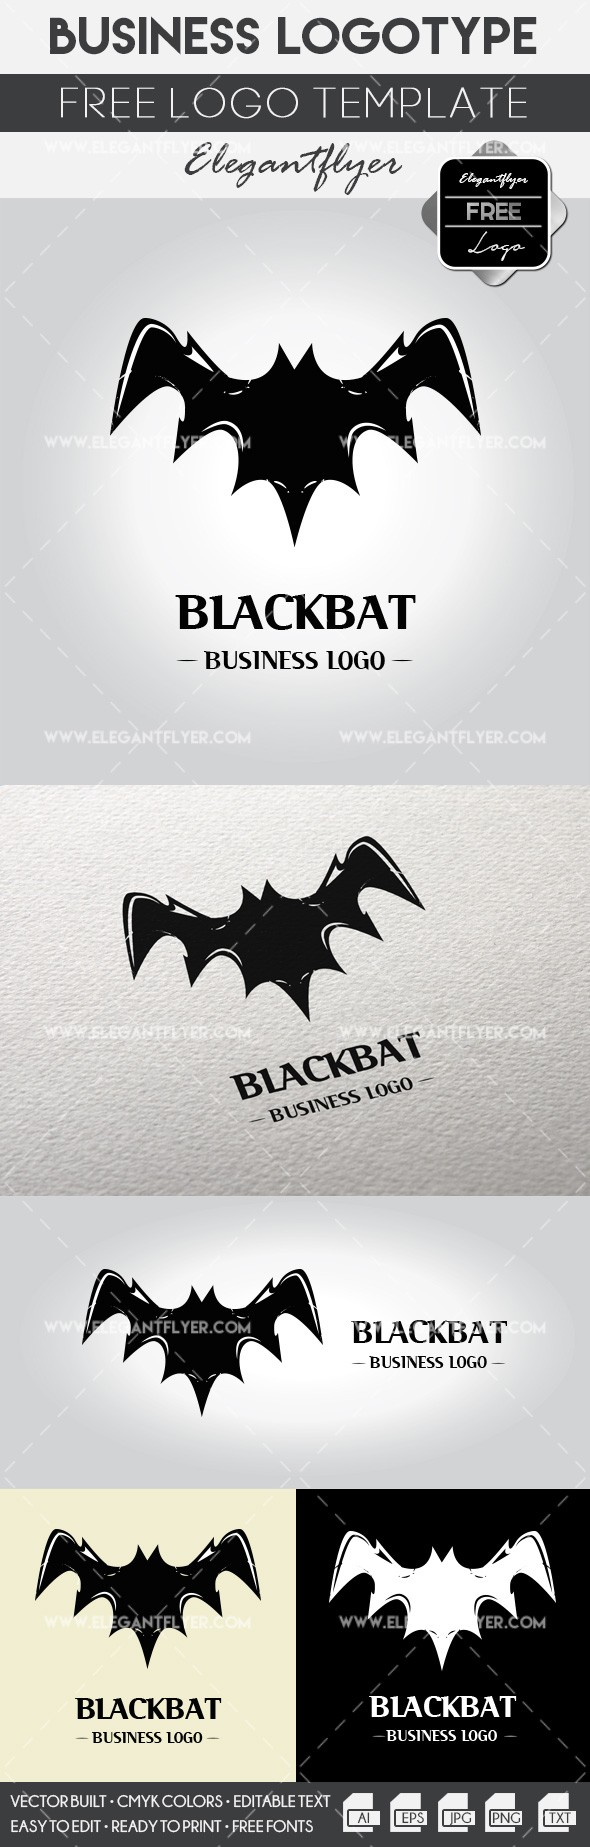 Blackbat Business by ElegantFlyer